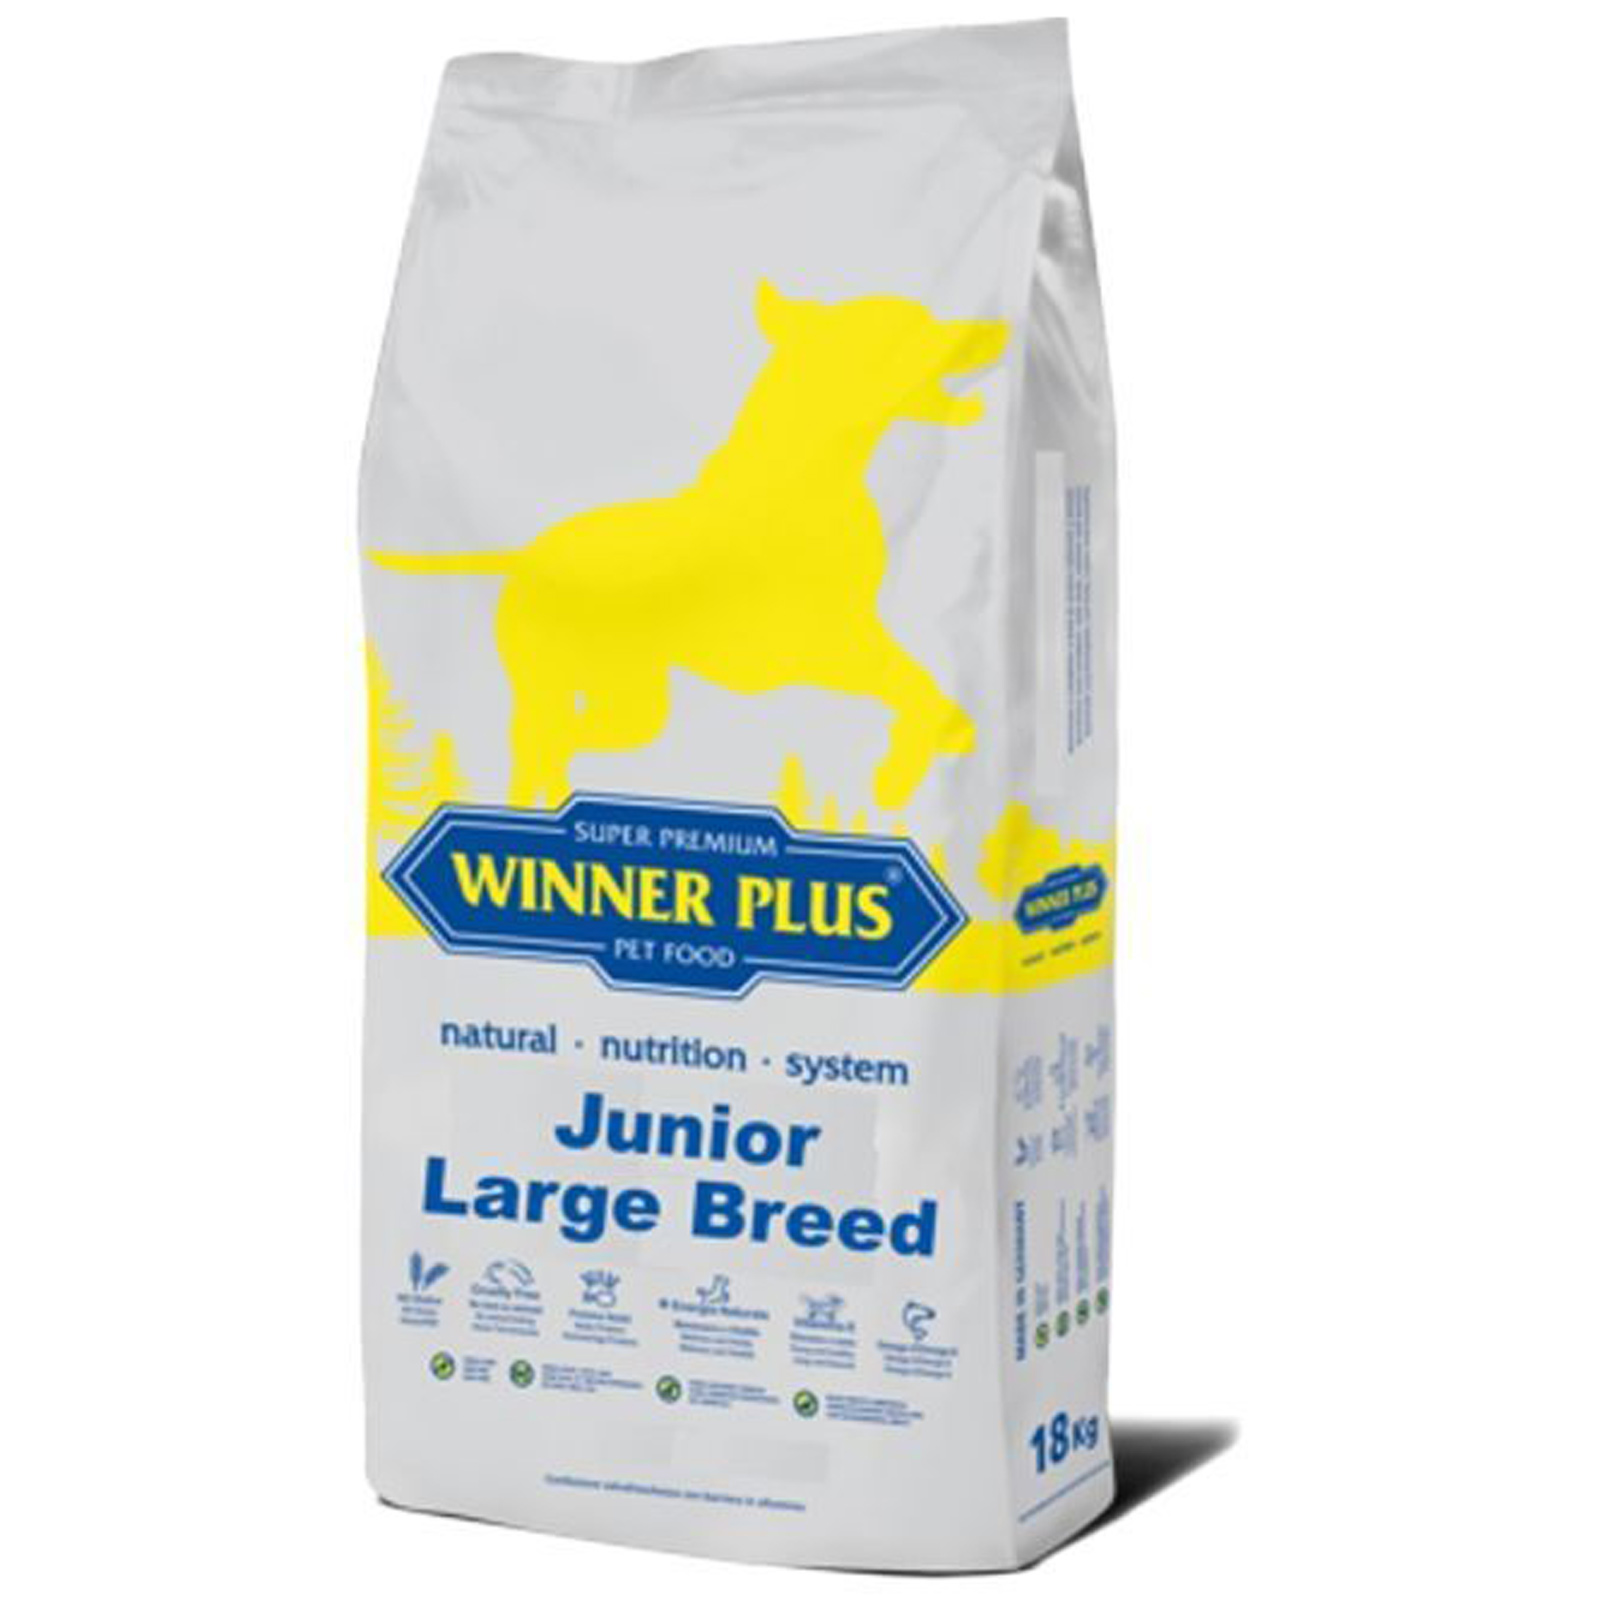 Winner Plus Super Premium Junior hundfoder 18 kg för stora valpar